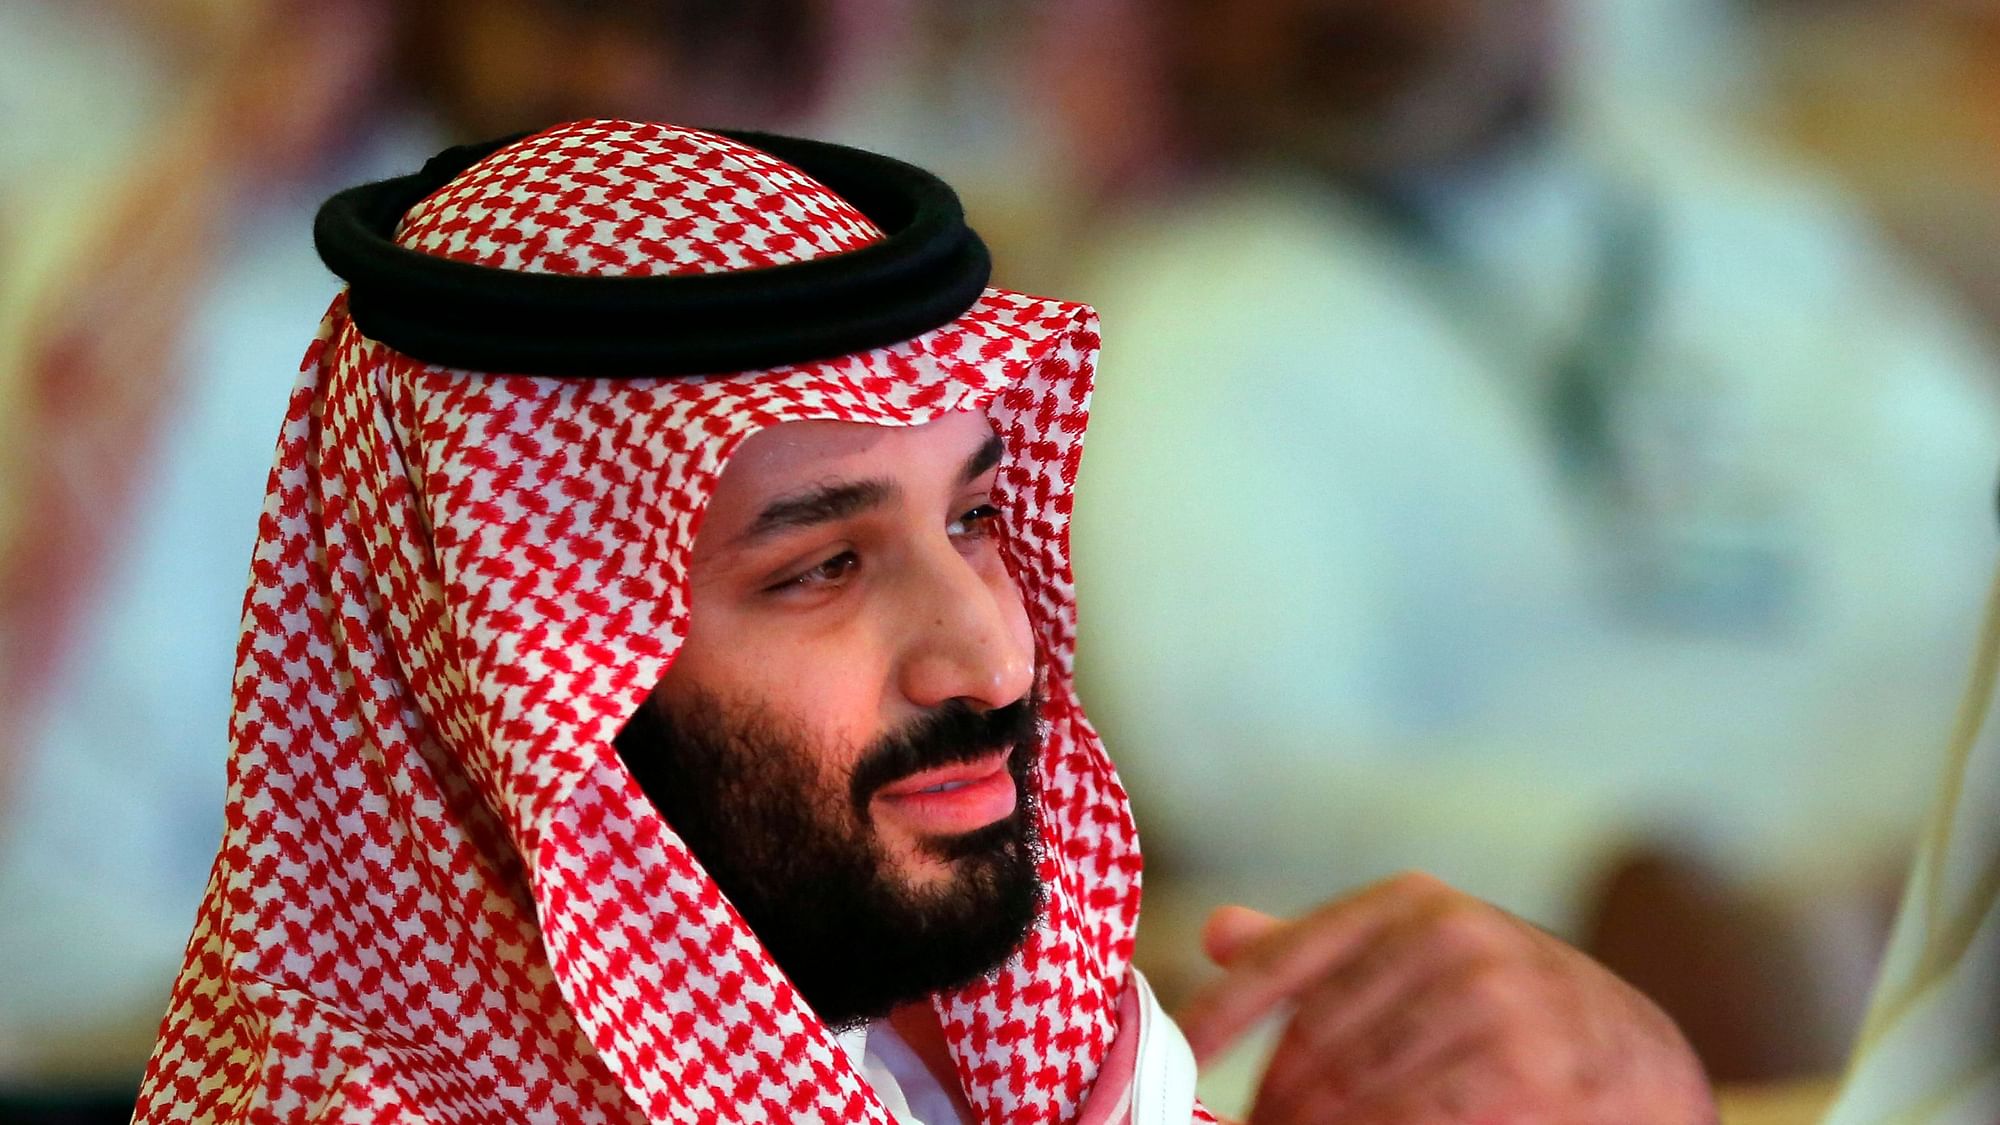 File photo of Saudi Crown Prince Mohammed bin Salman.